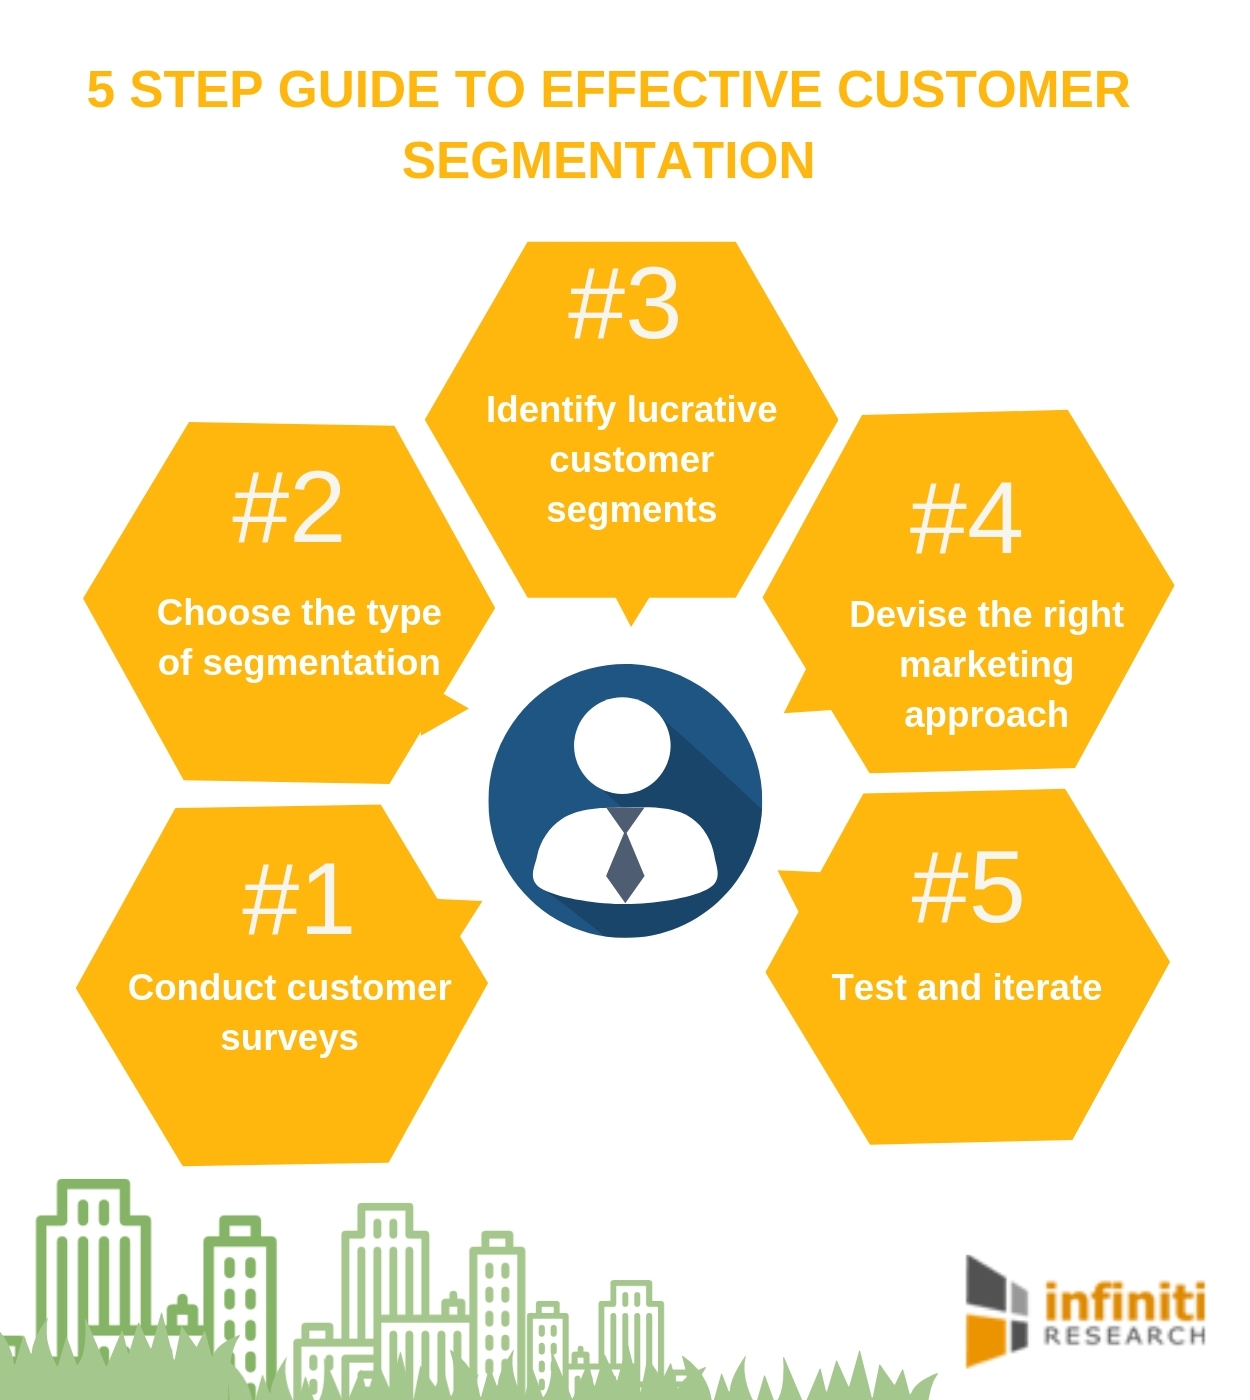 Infiniti’s 5 Step Guide to Effective Customer Segmentation Download